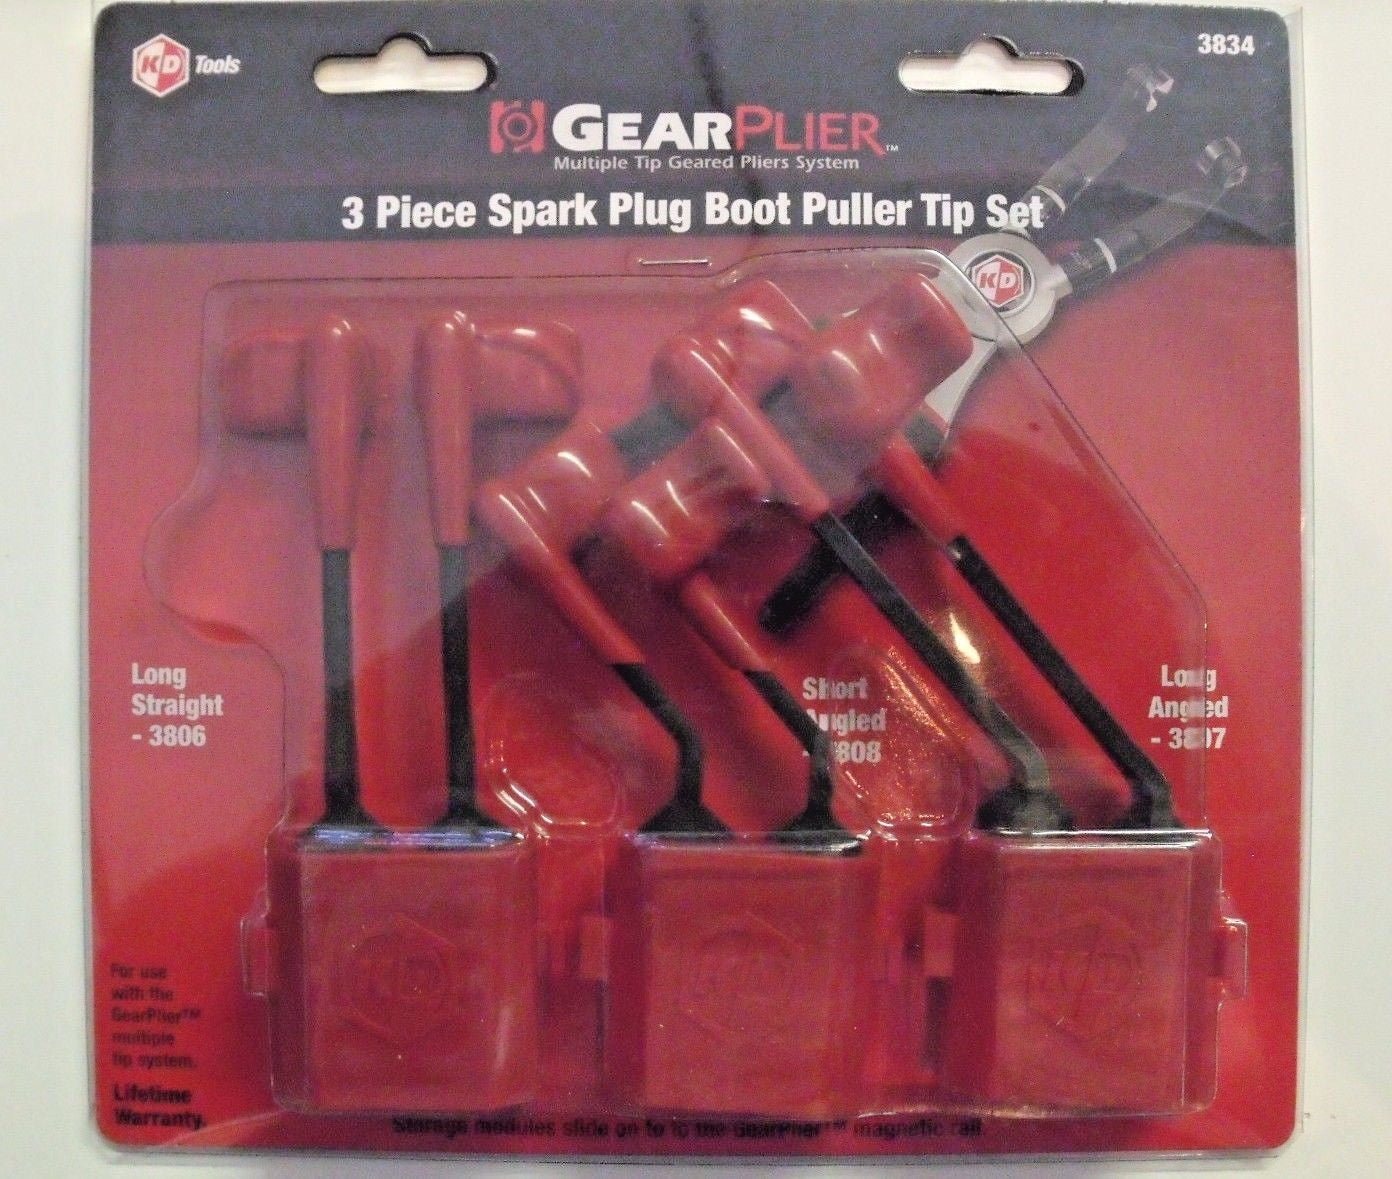 KD GearPlier 3 Piece Spark Plug Boot Puller Tip Set KD 3834